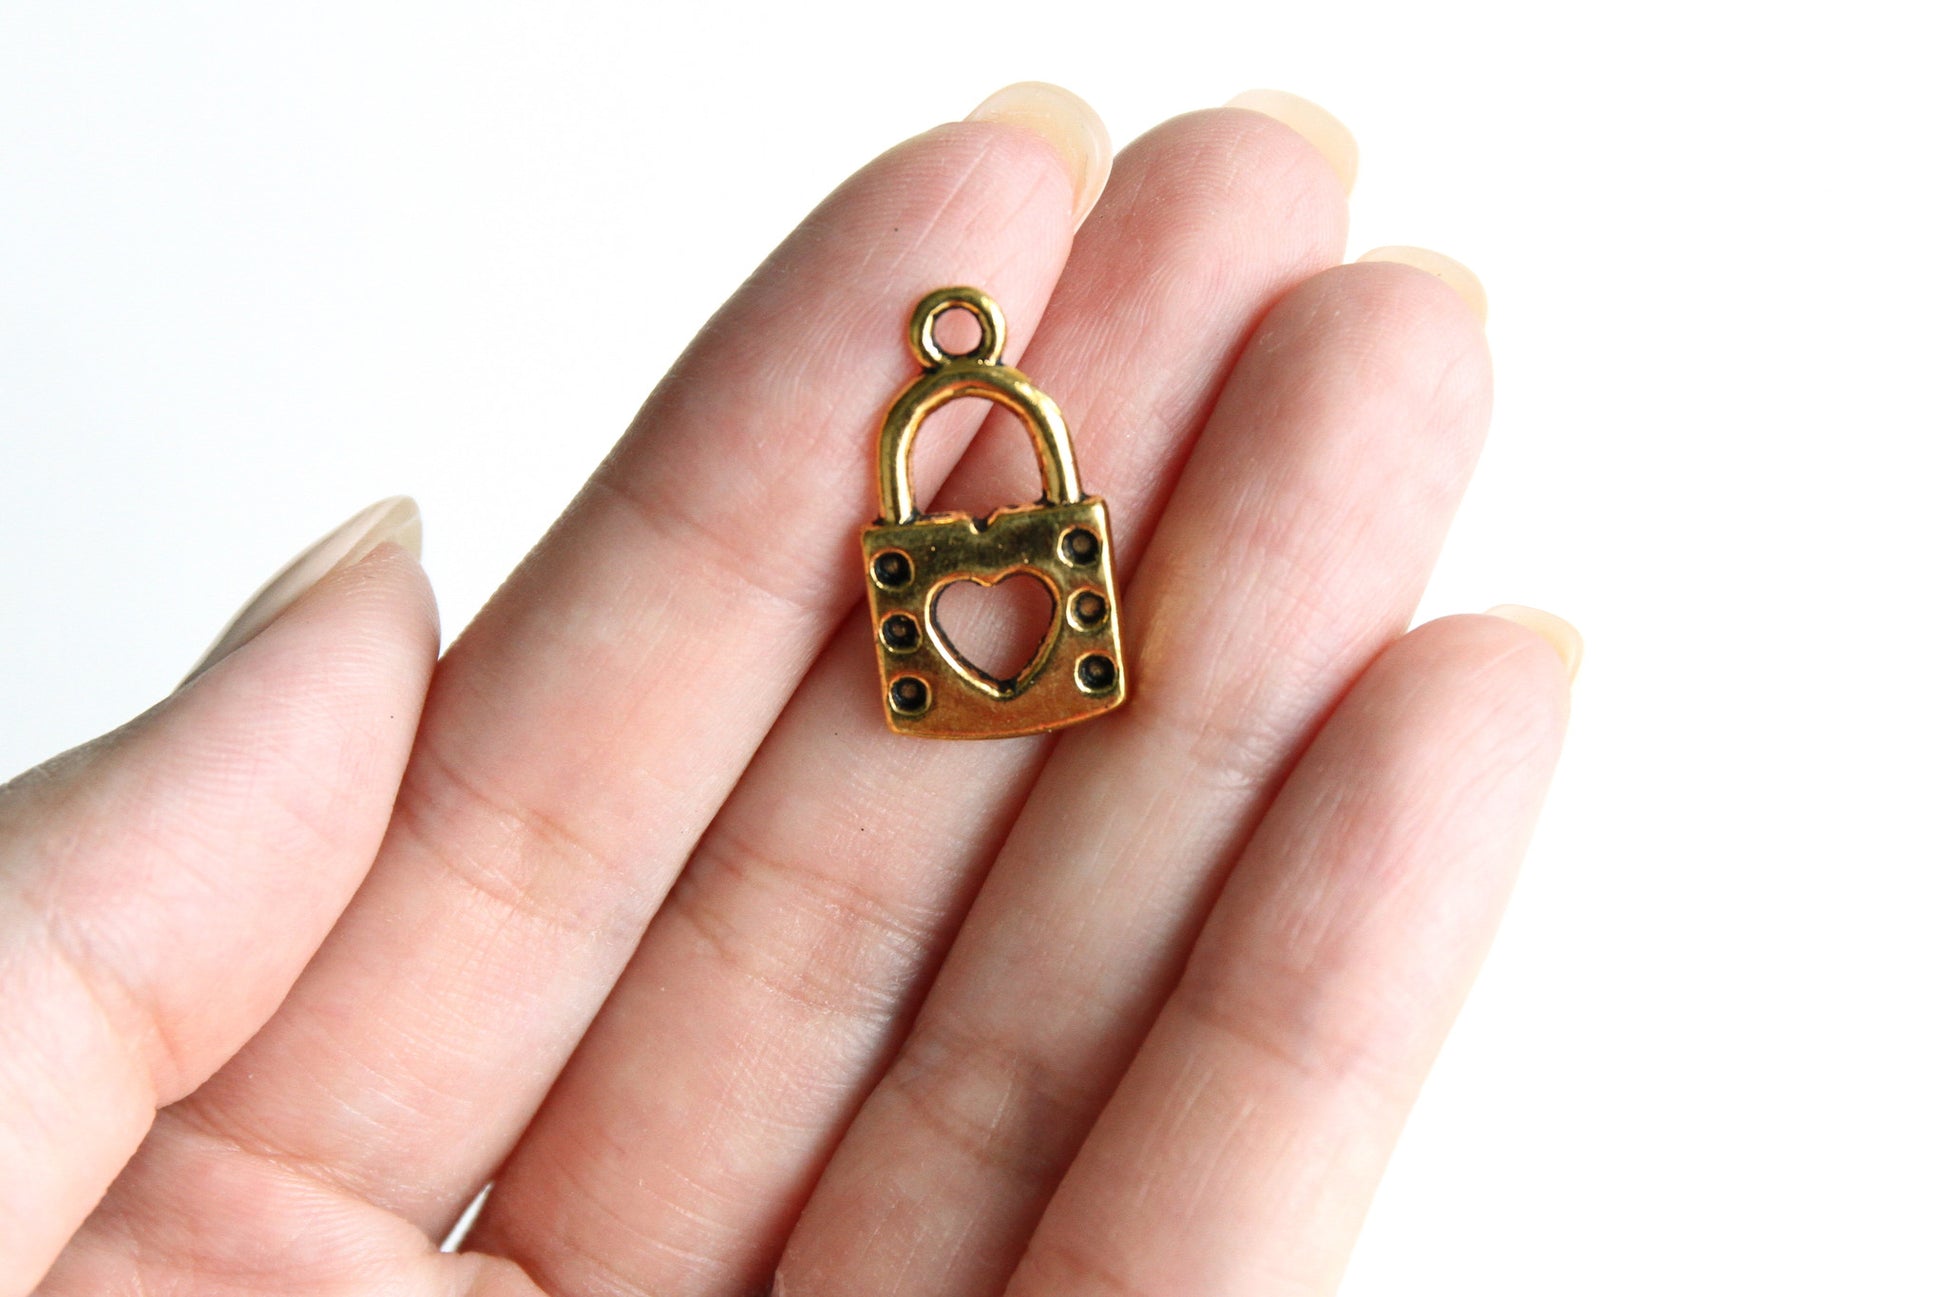 Charm - Lock with Heart Shape Key Hole, Antique Gold - KEY Handmade
 - 2